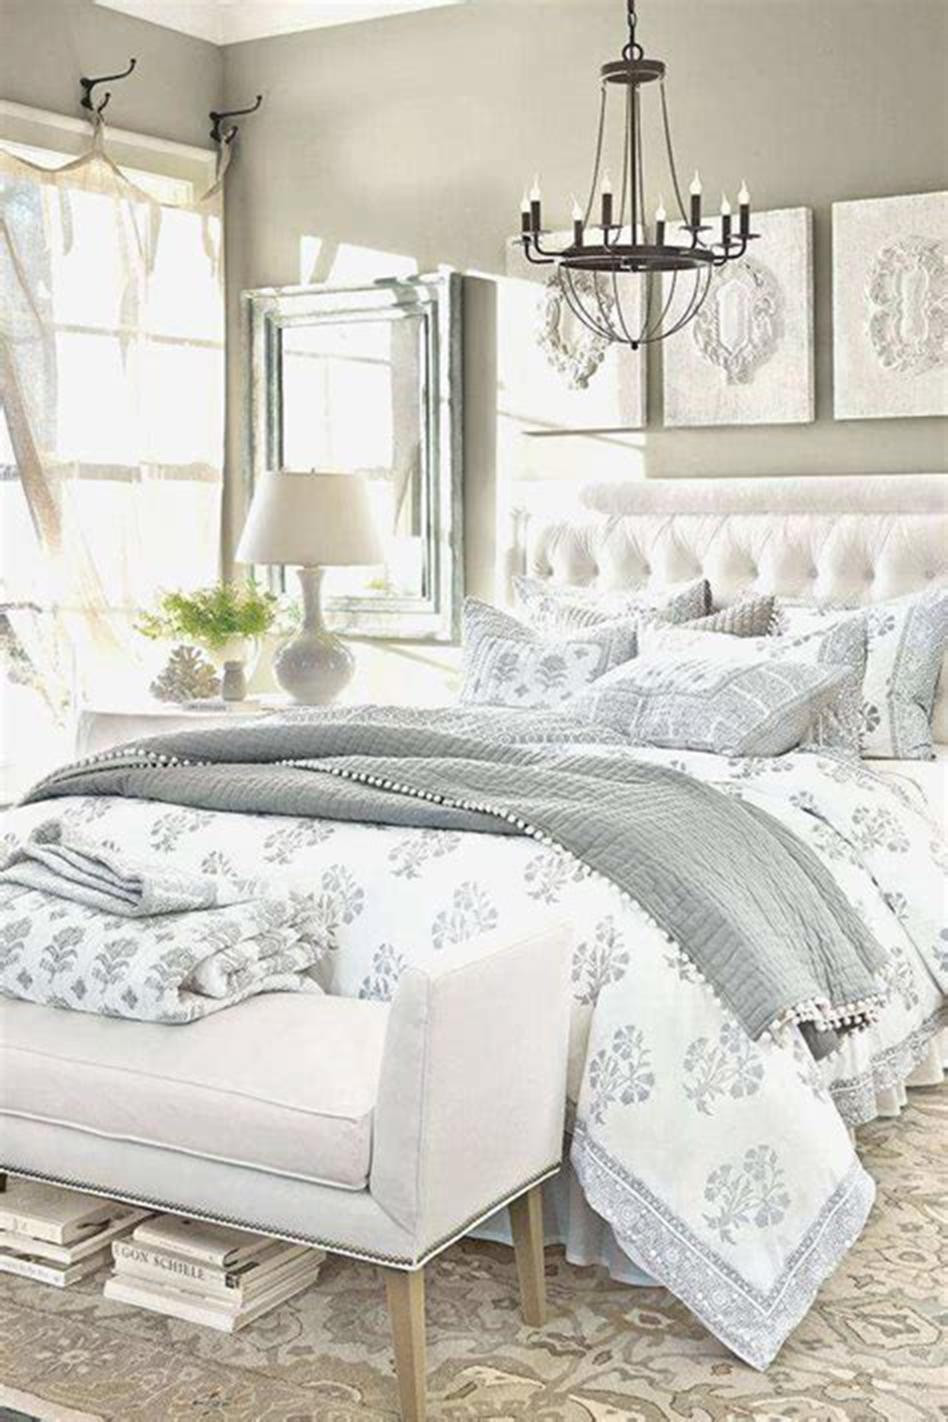 Master Bedroom Bedding Sets
 45 Beautiful Master Bedroom Bedding Ideas 2019 32